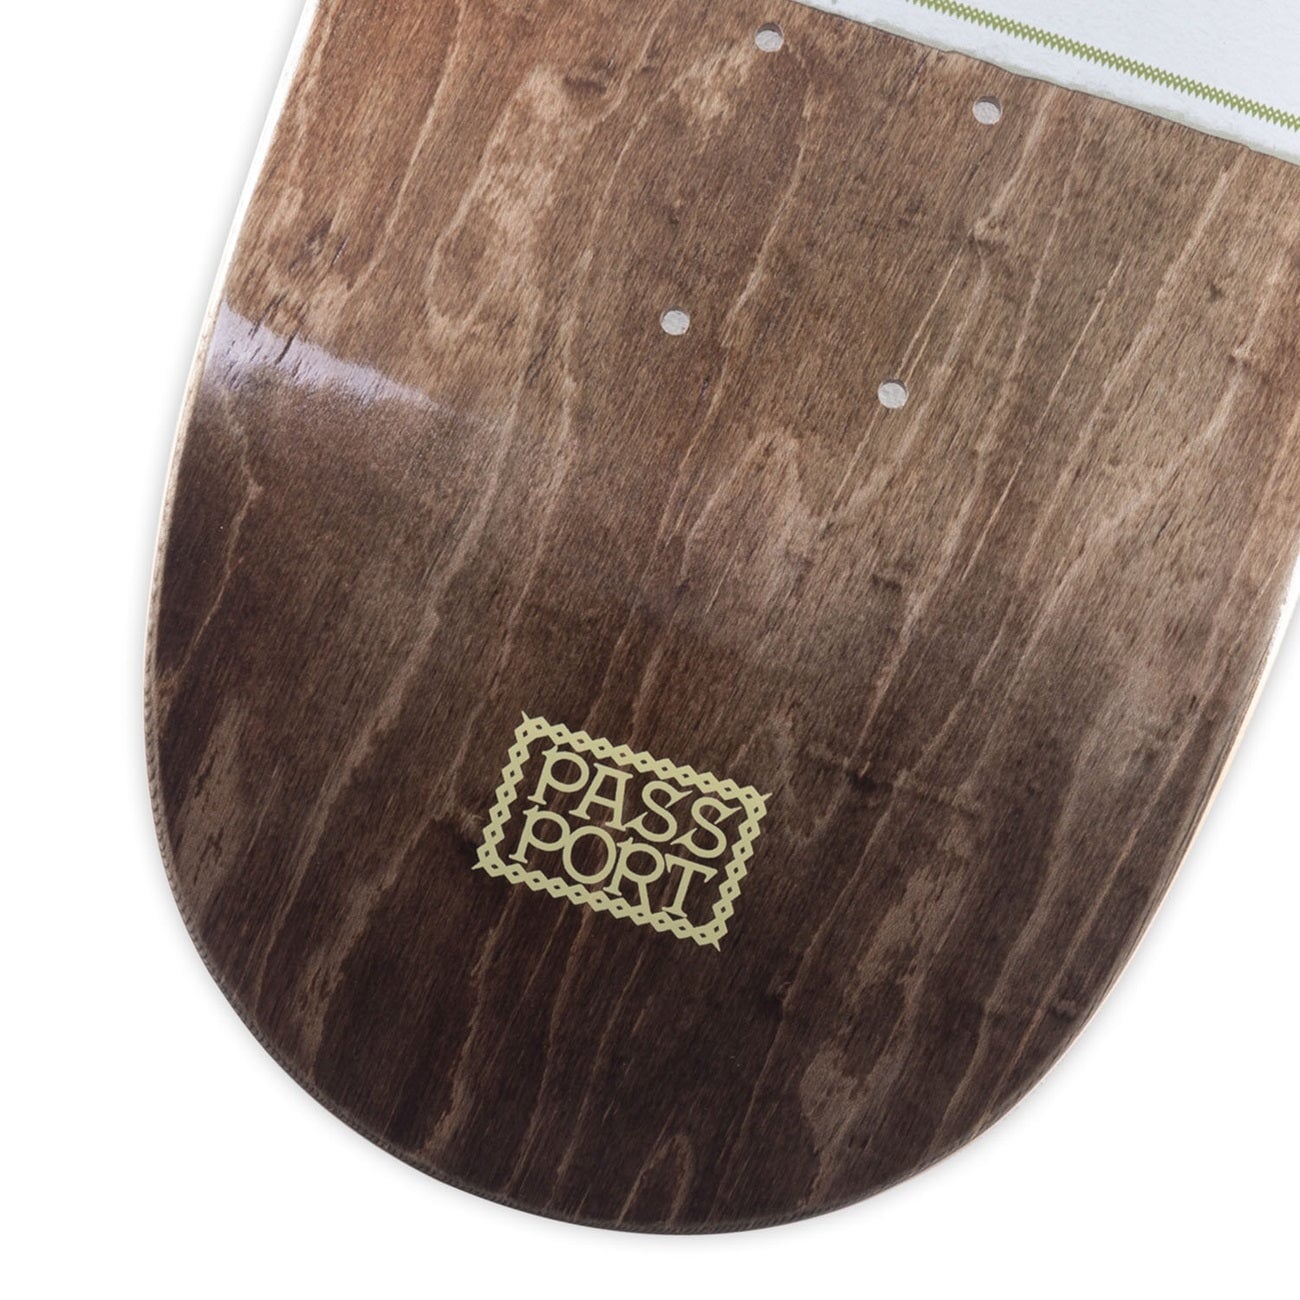 Pass~Port Invasive Species Lantana Deck - 8.5 Decks Passport Skateboards 